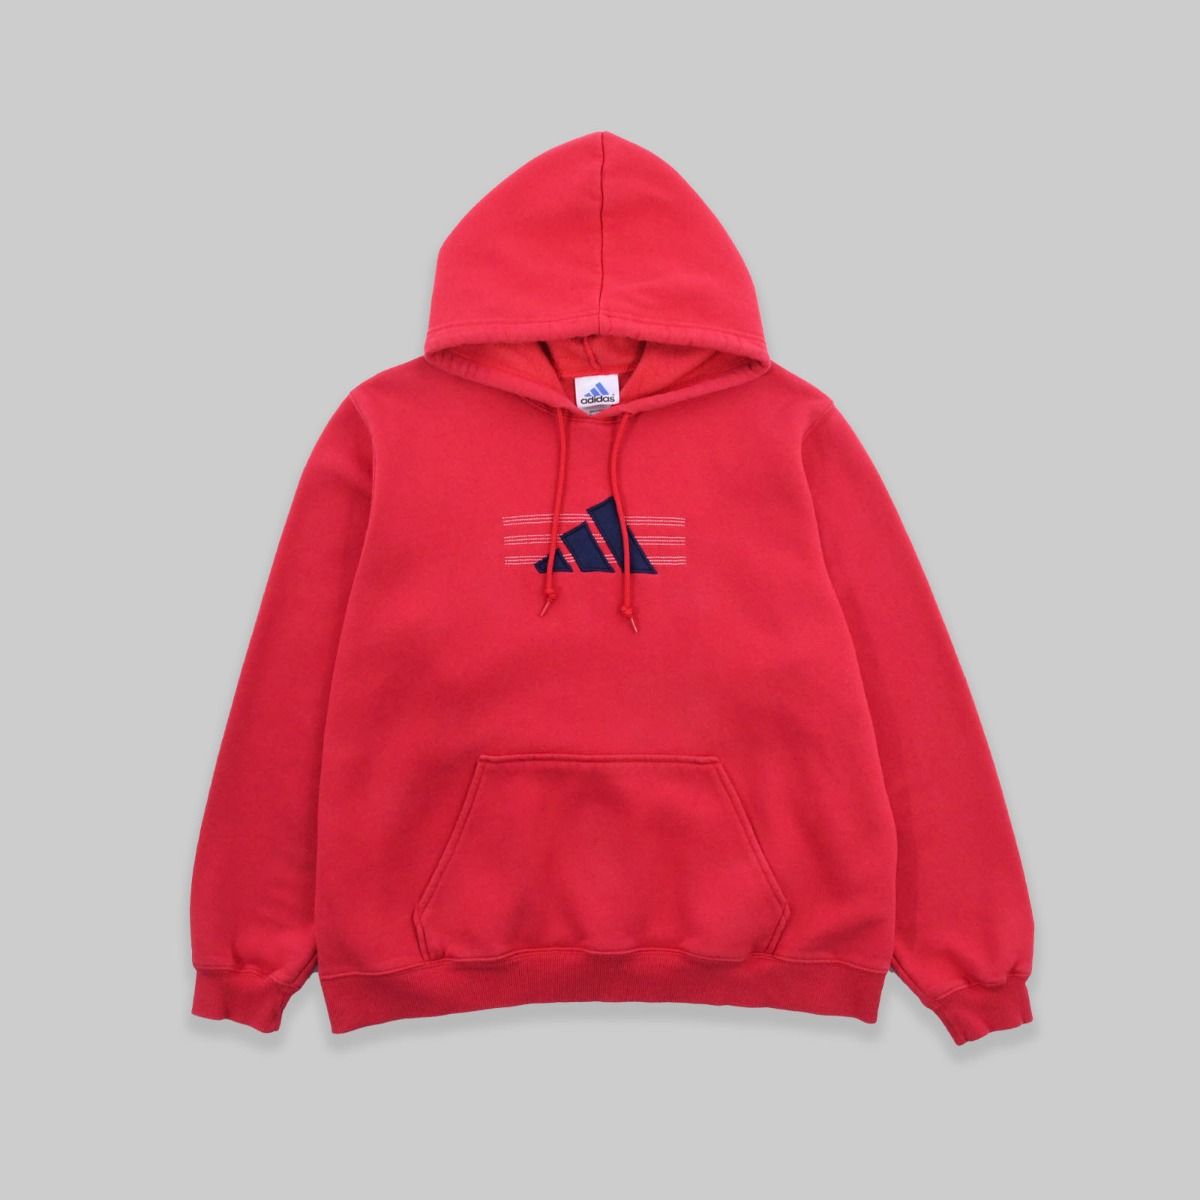 Adidas 1990s Red Hoodie